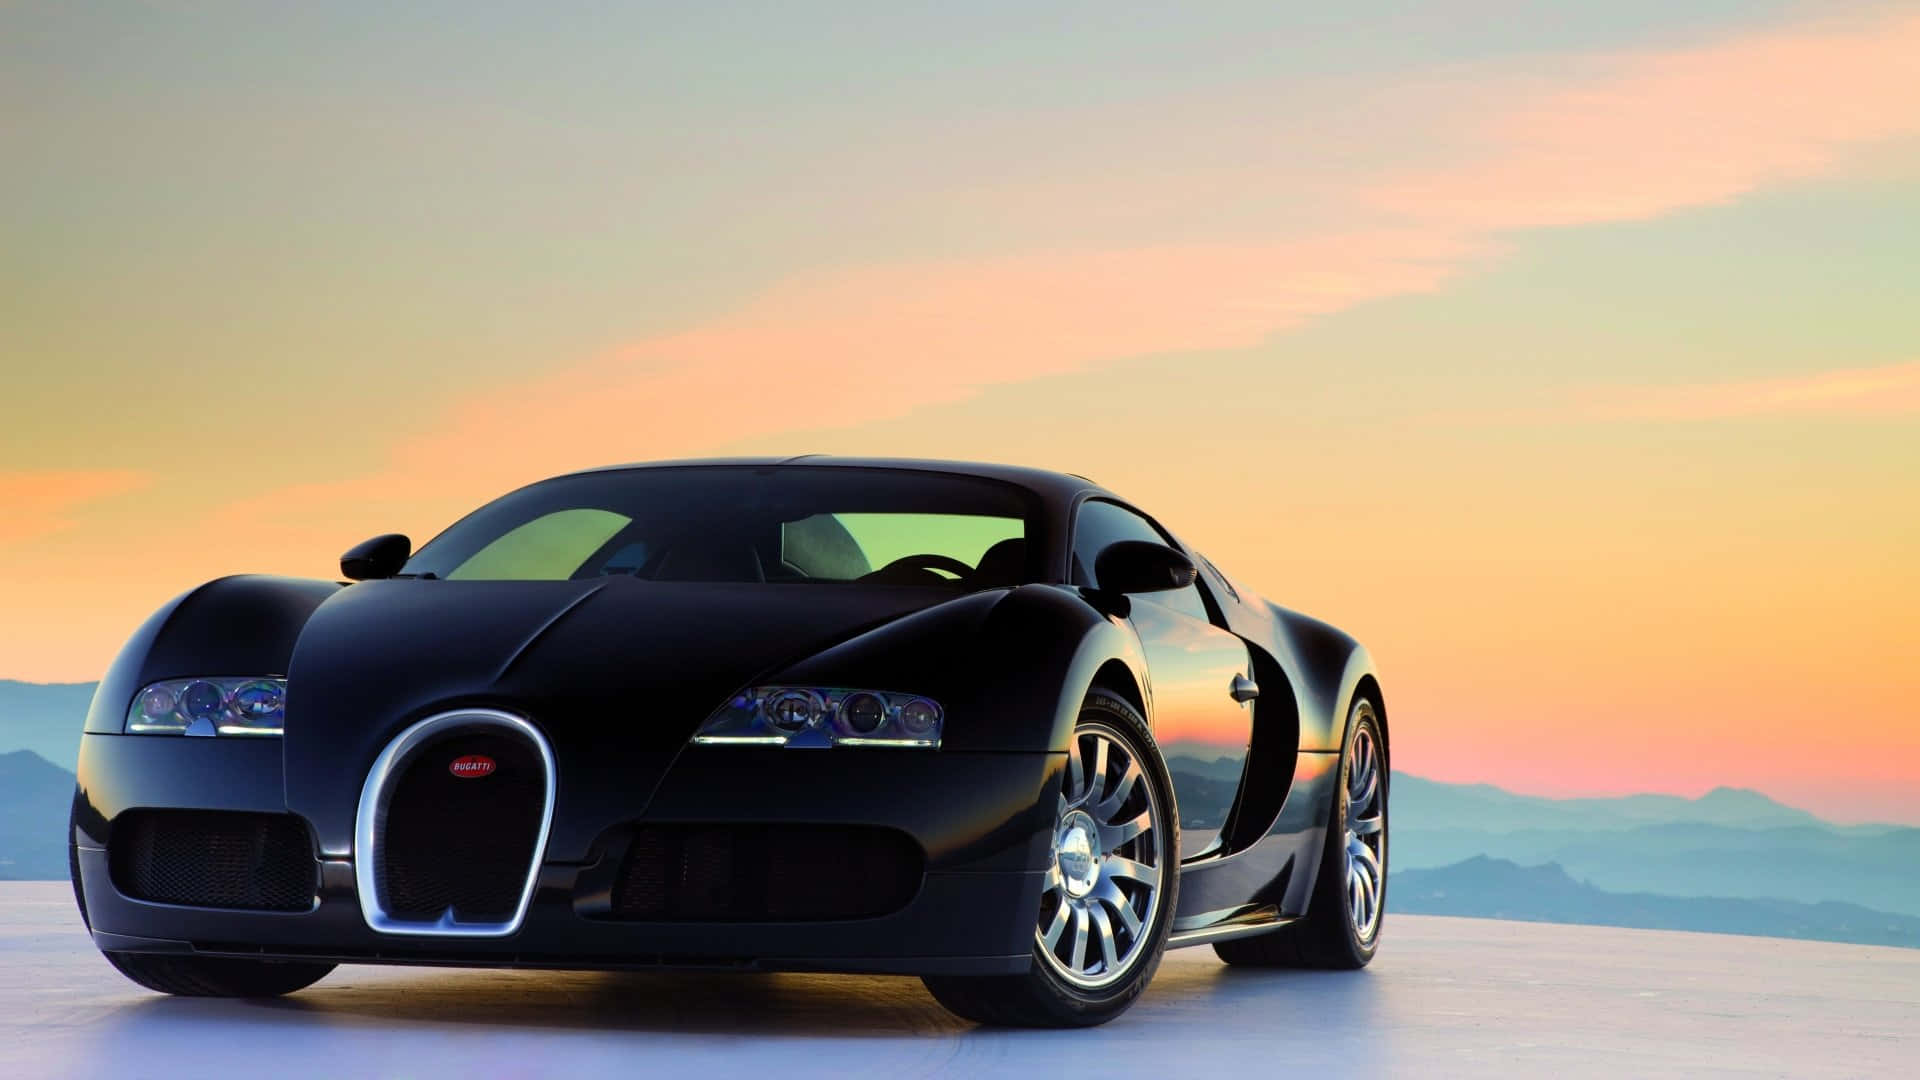 Stunning Bugatti Veyron Sports Car in Action Wallpaper